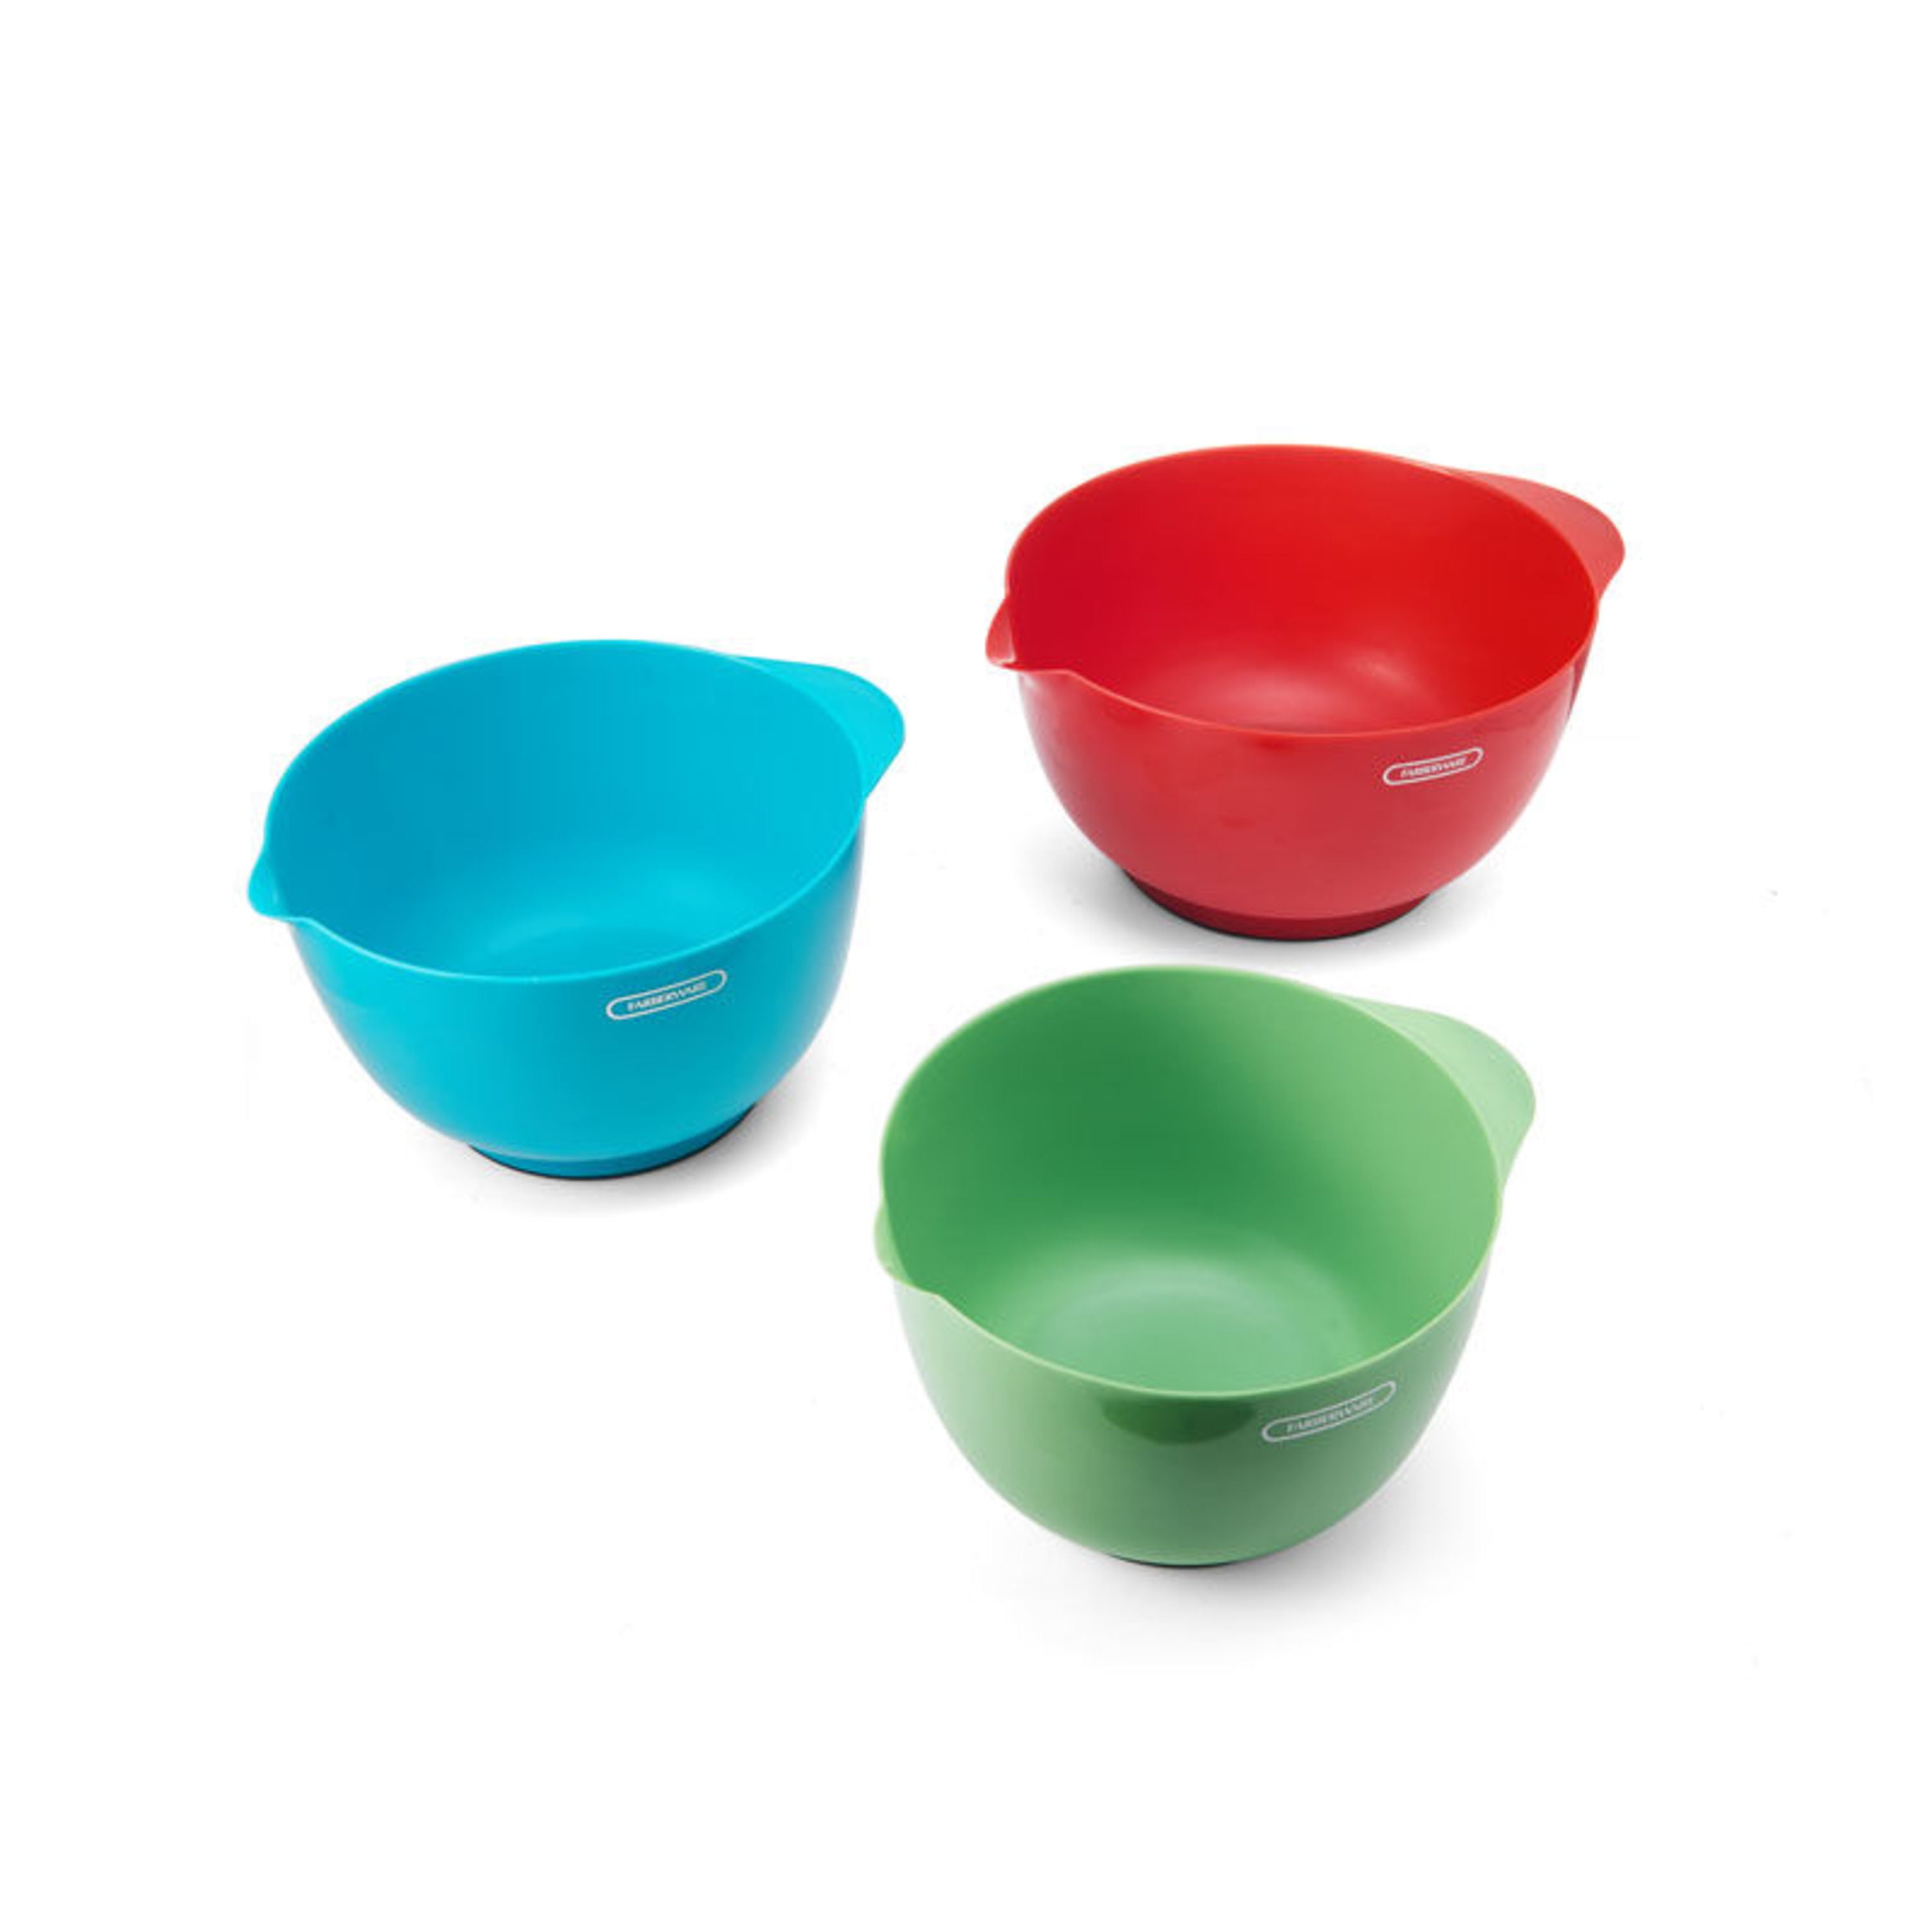  Farberware - 5216128 Farberware Professional Plastic Mixing  Bowls, Set of 3, Orange/Red/LightGreen: Home & Kitchen